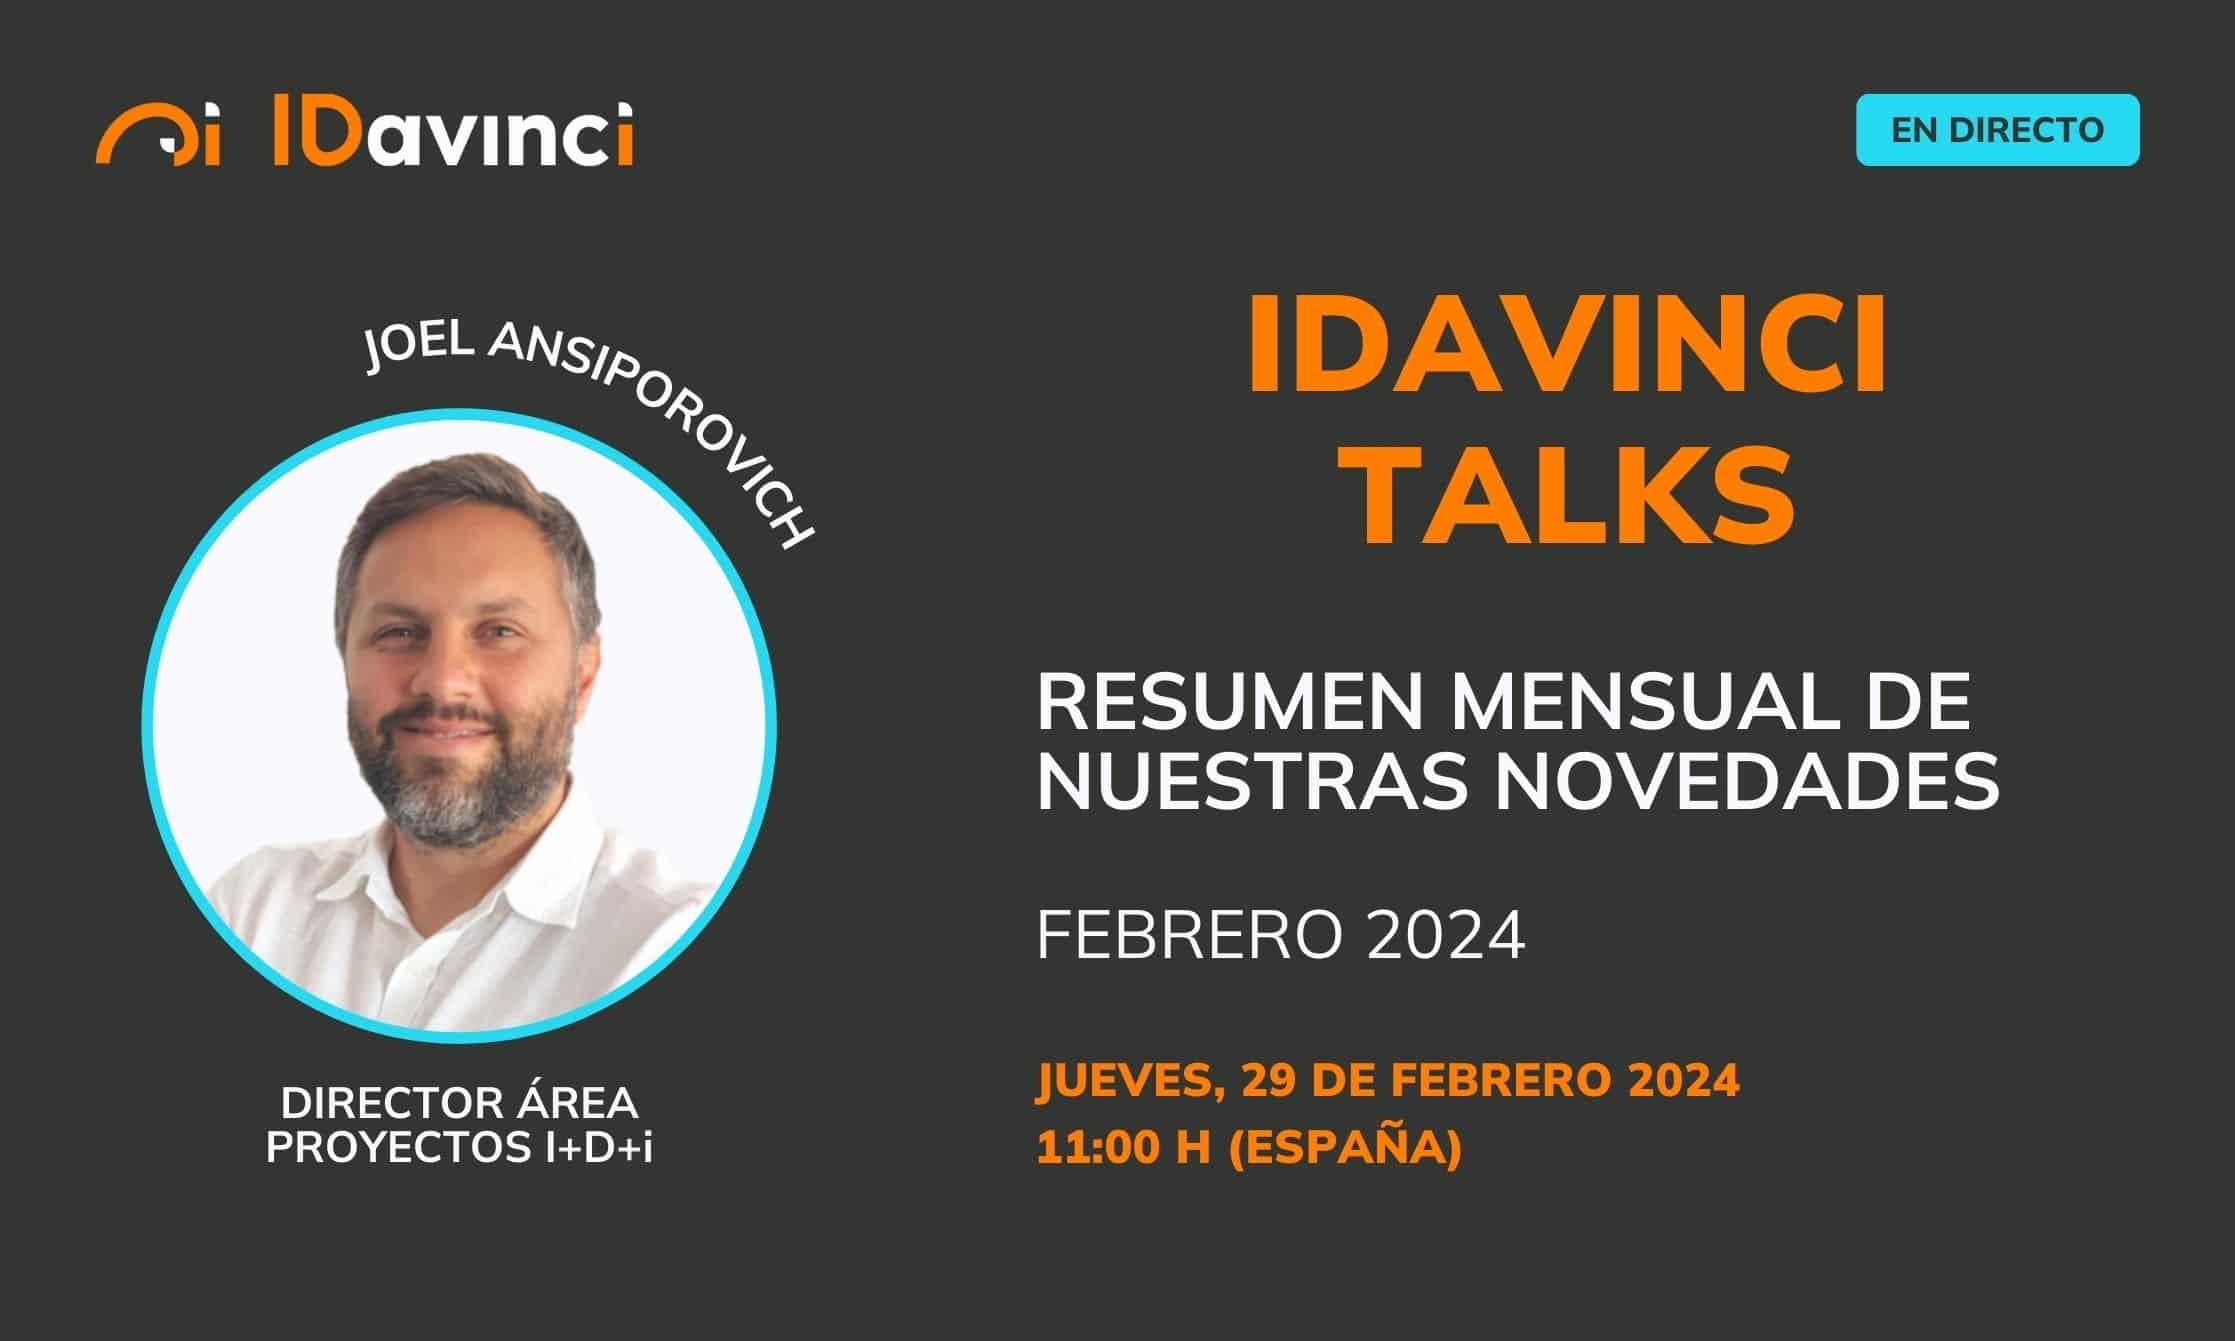 idavinci-talks-febrero-2024